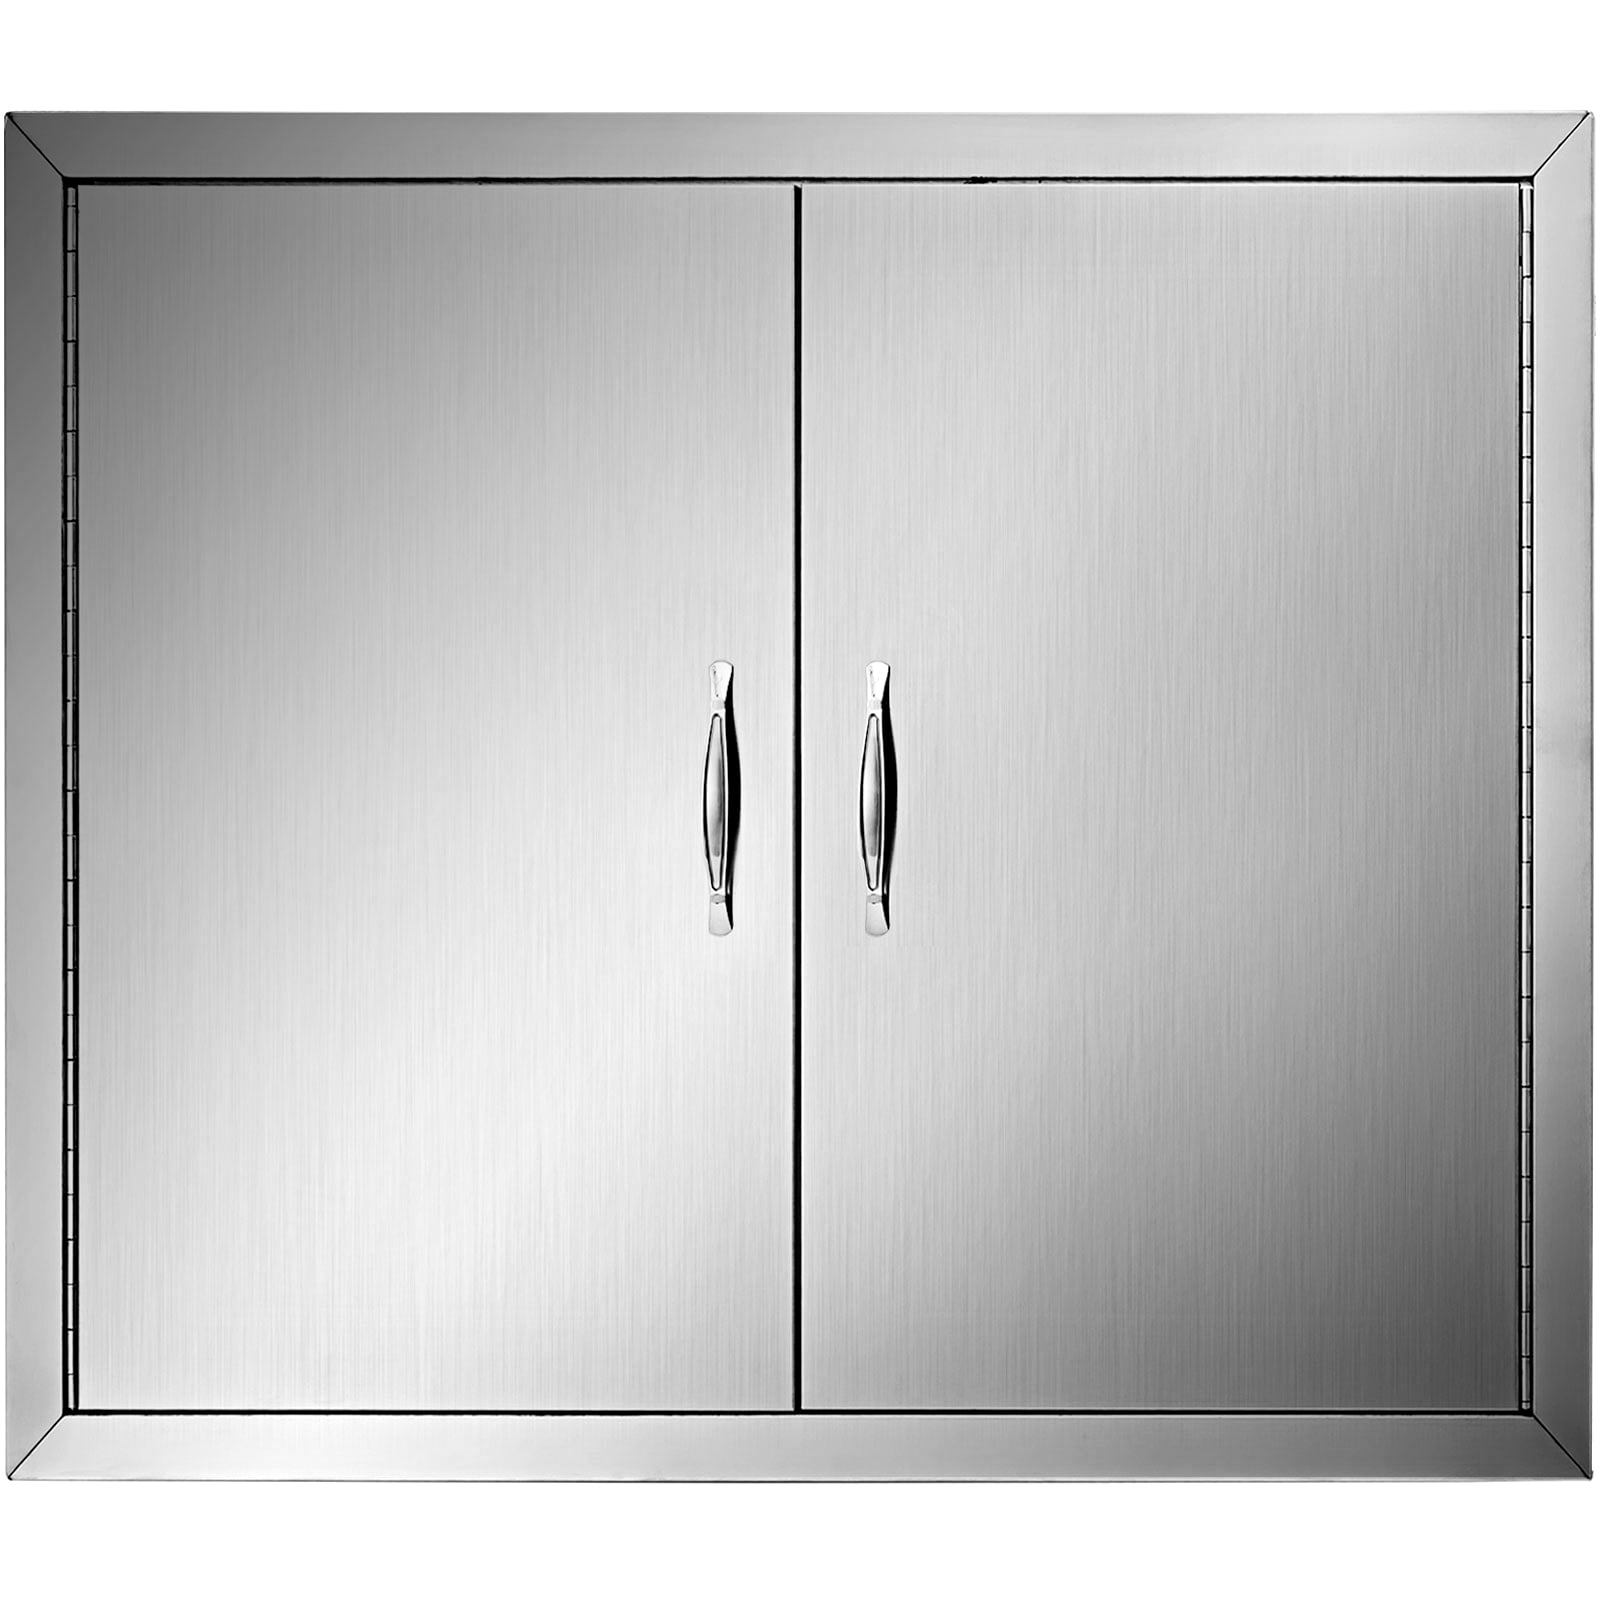 Details about   Stainless Steel BBQ Double Door Drawer Access Outdoor Kitchen Door 28-31 inch 